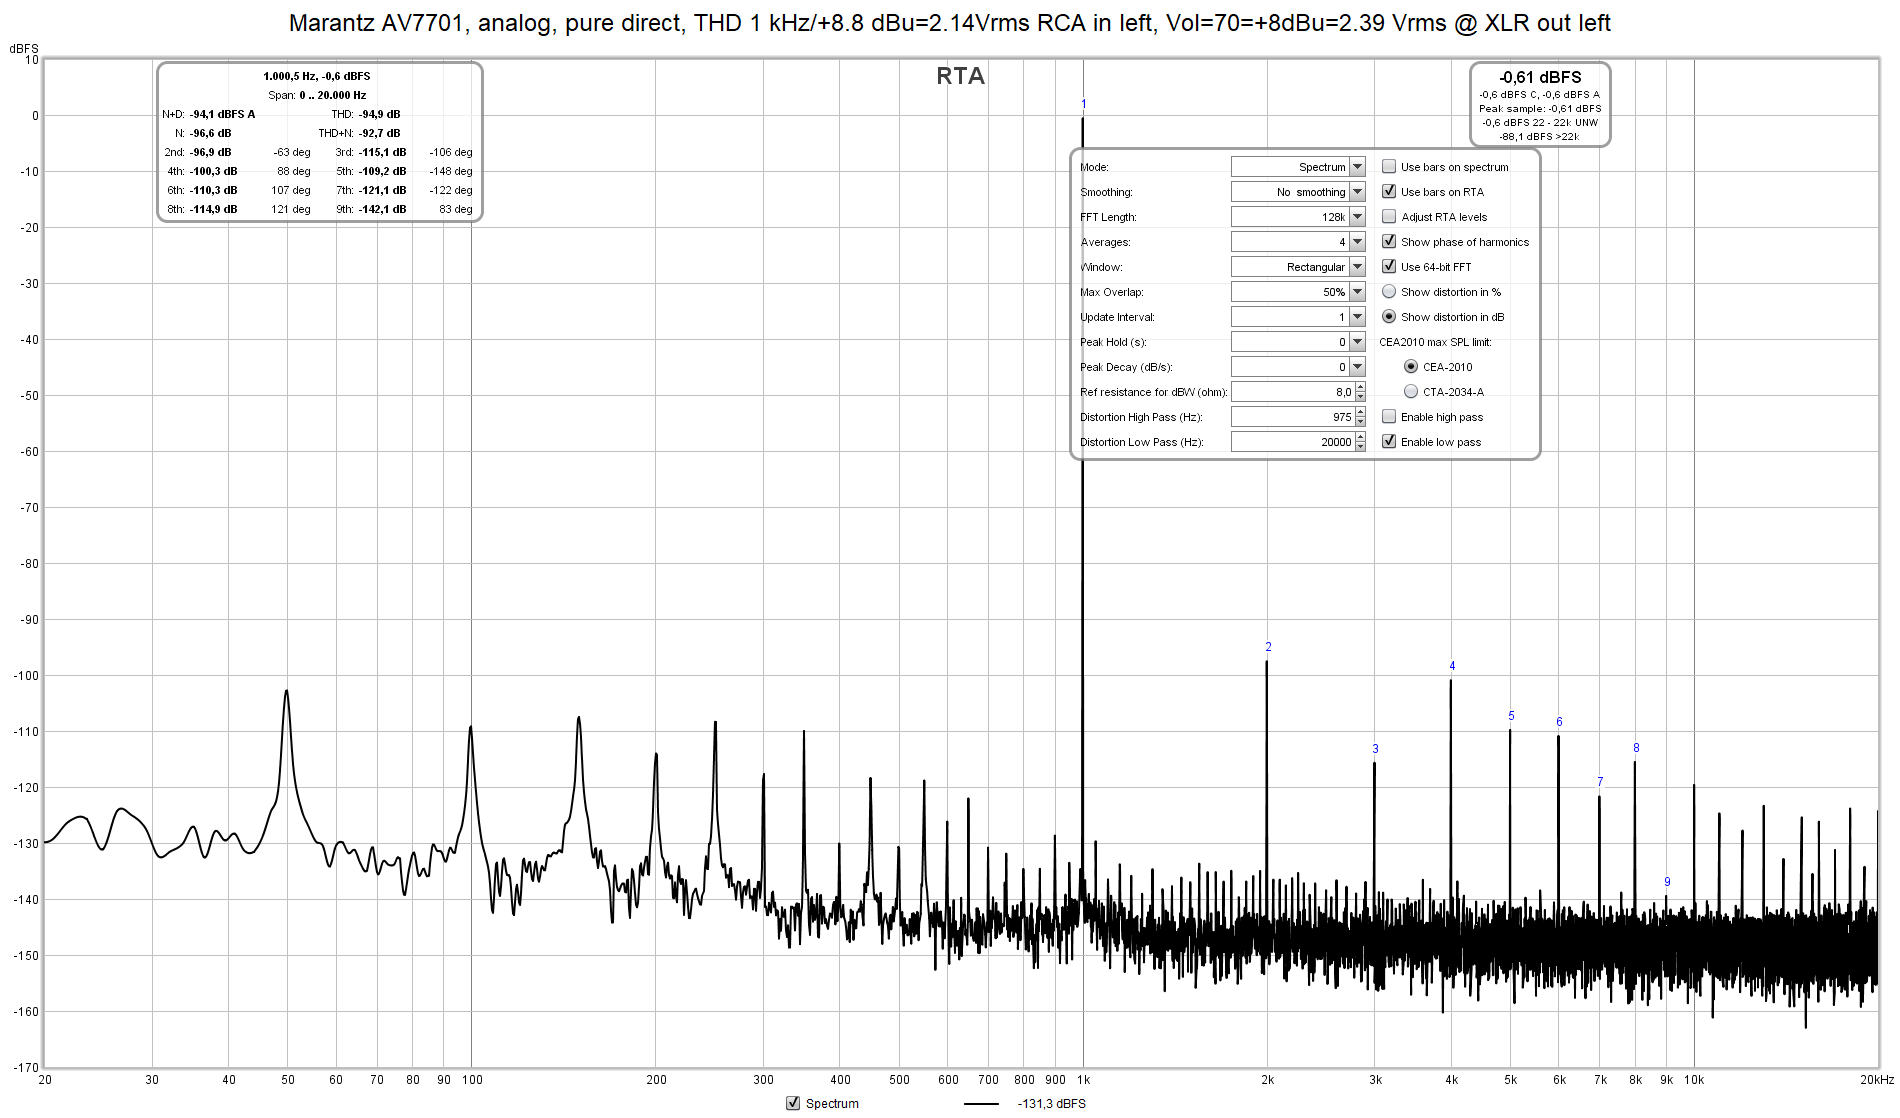 THD 1 kHz +8.8 dBu = 2.14 Vrms RCA in left pure direct Vol=77.0=2.39 Vrms=+9.8 dBu XLR left AD...png